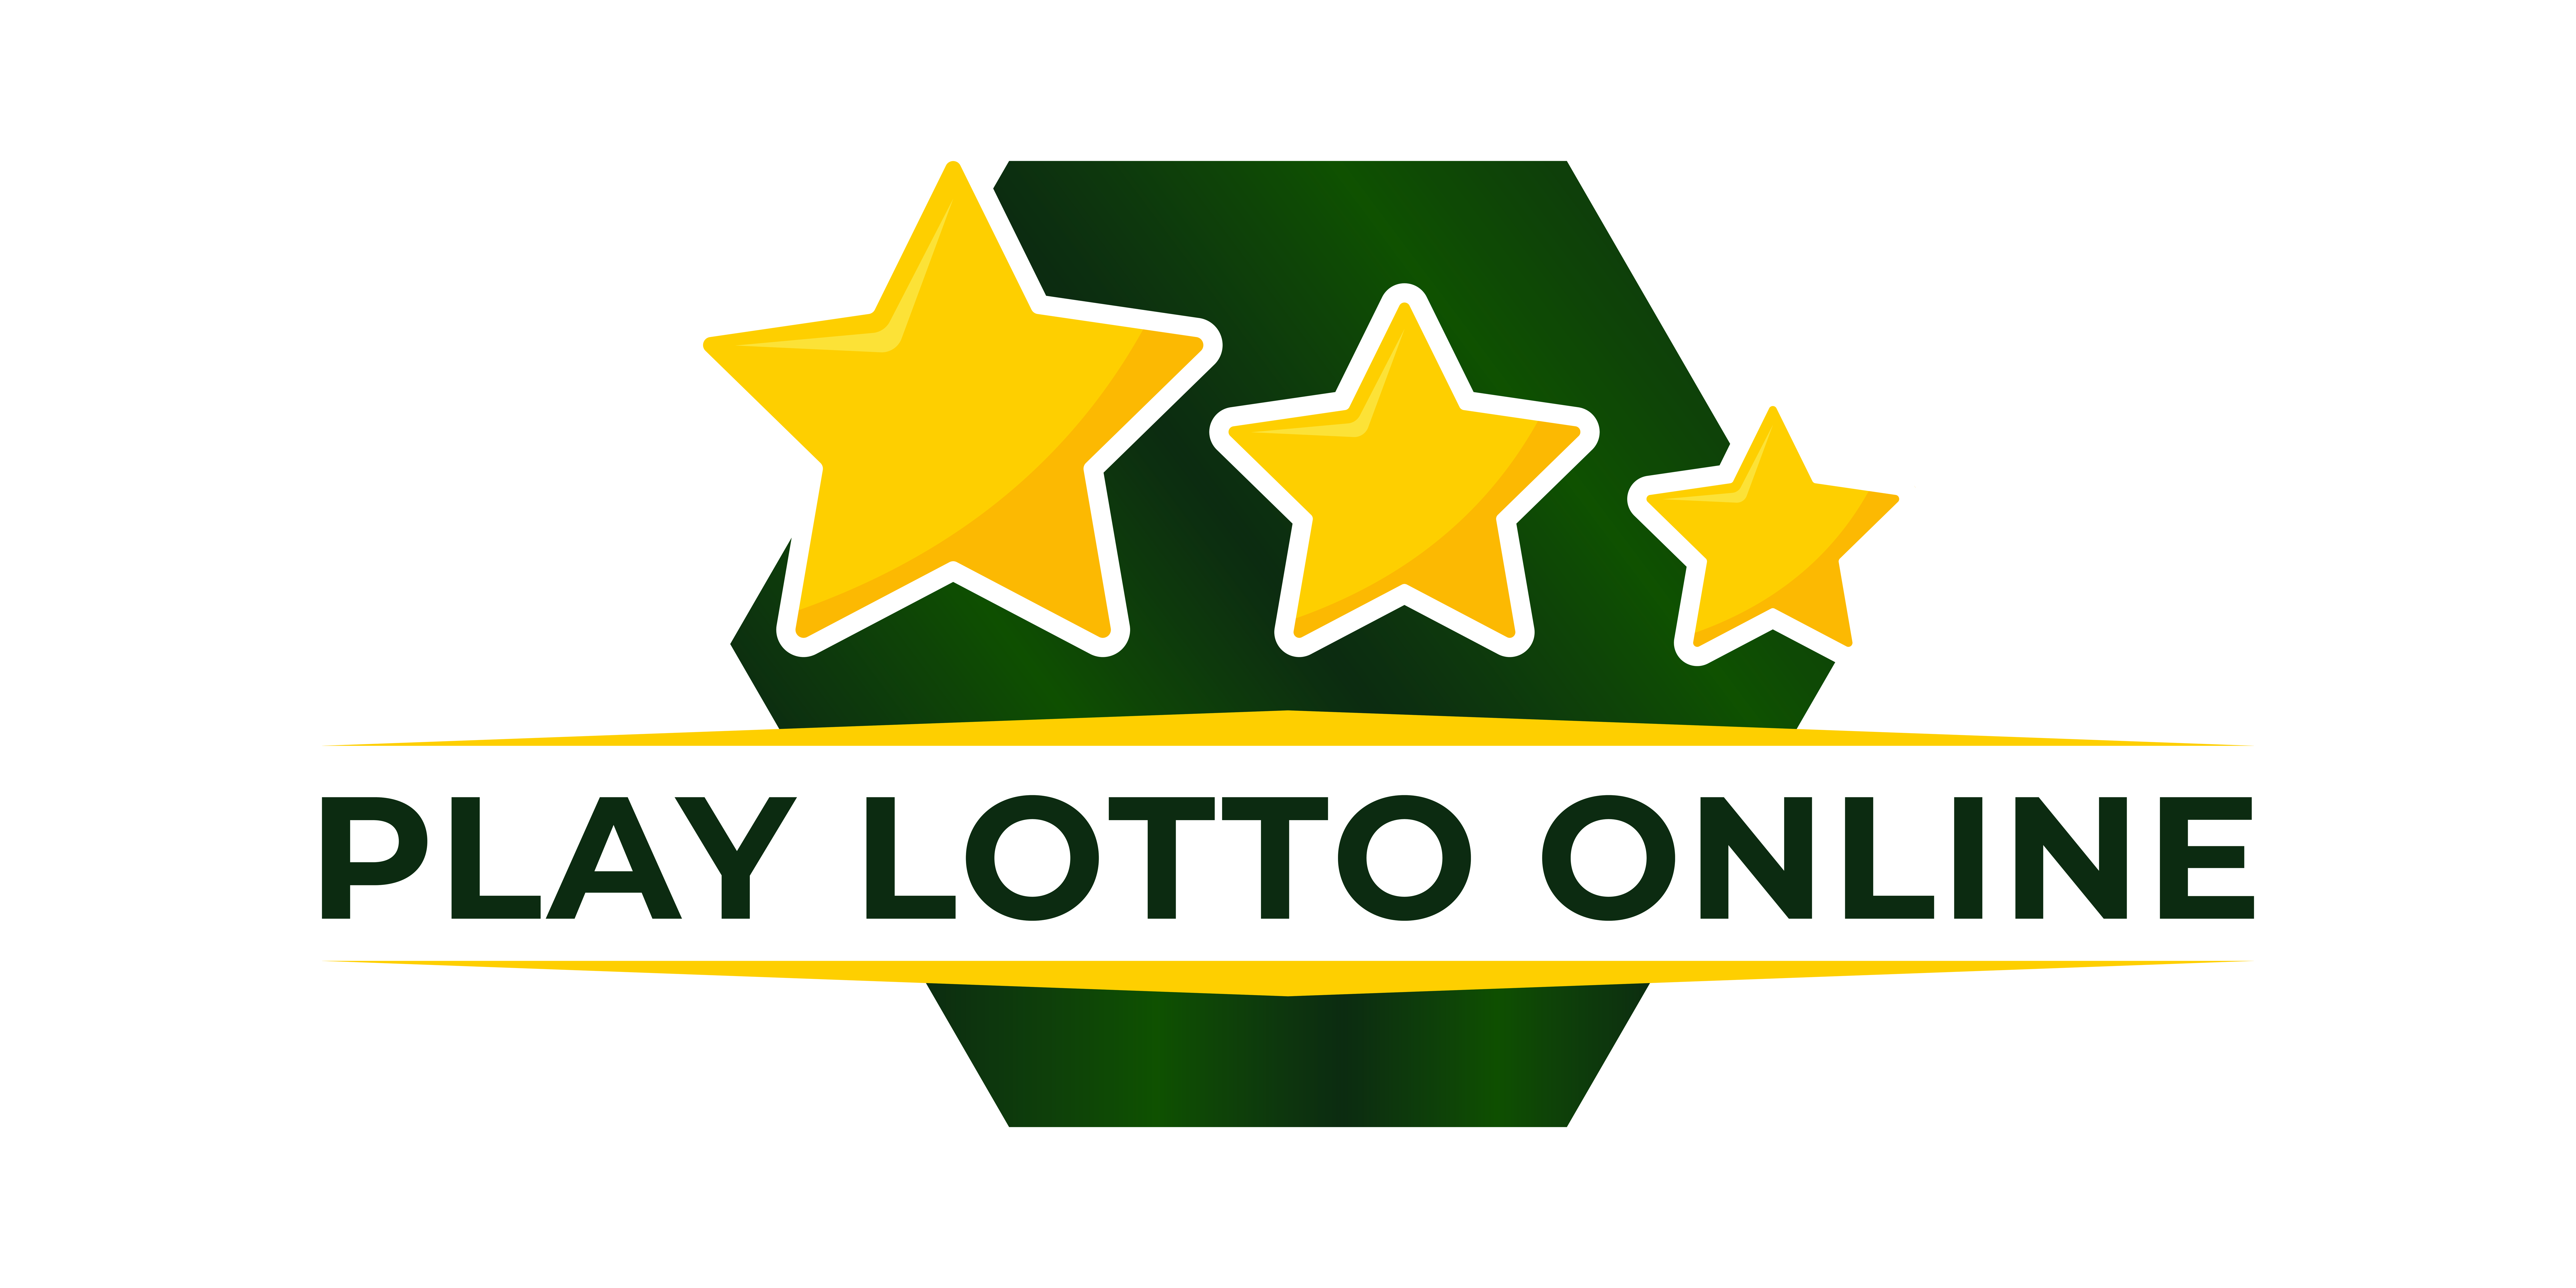 Graj w Lotto online

